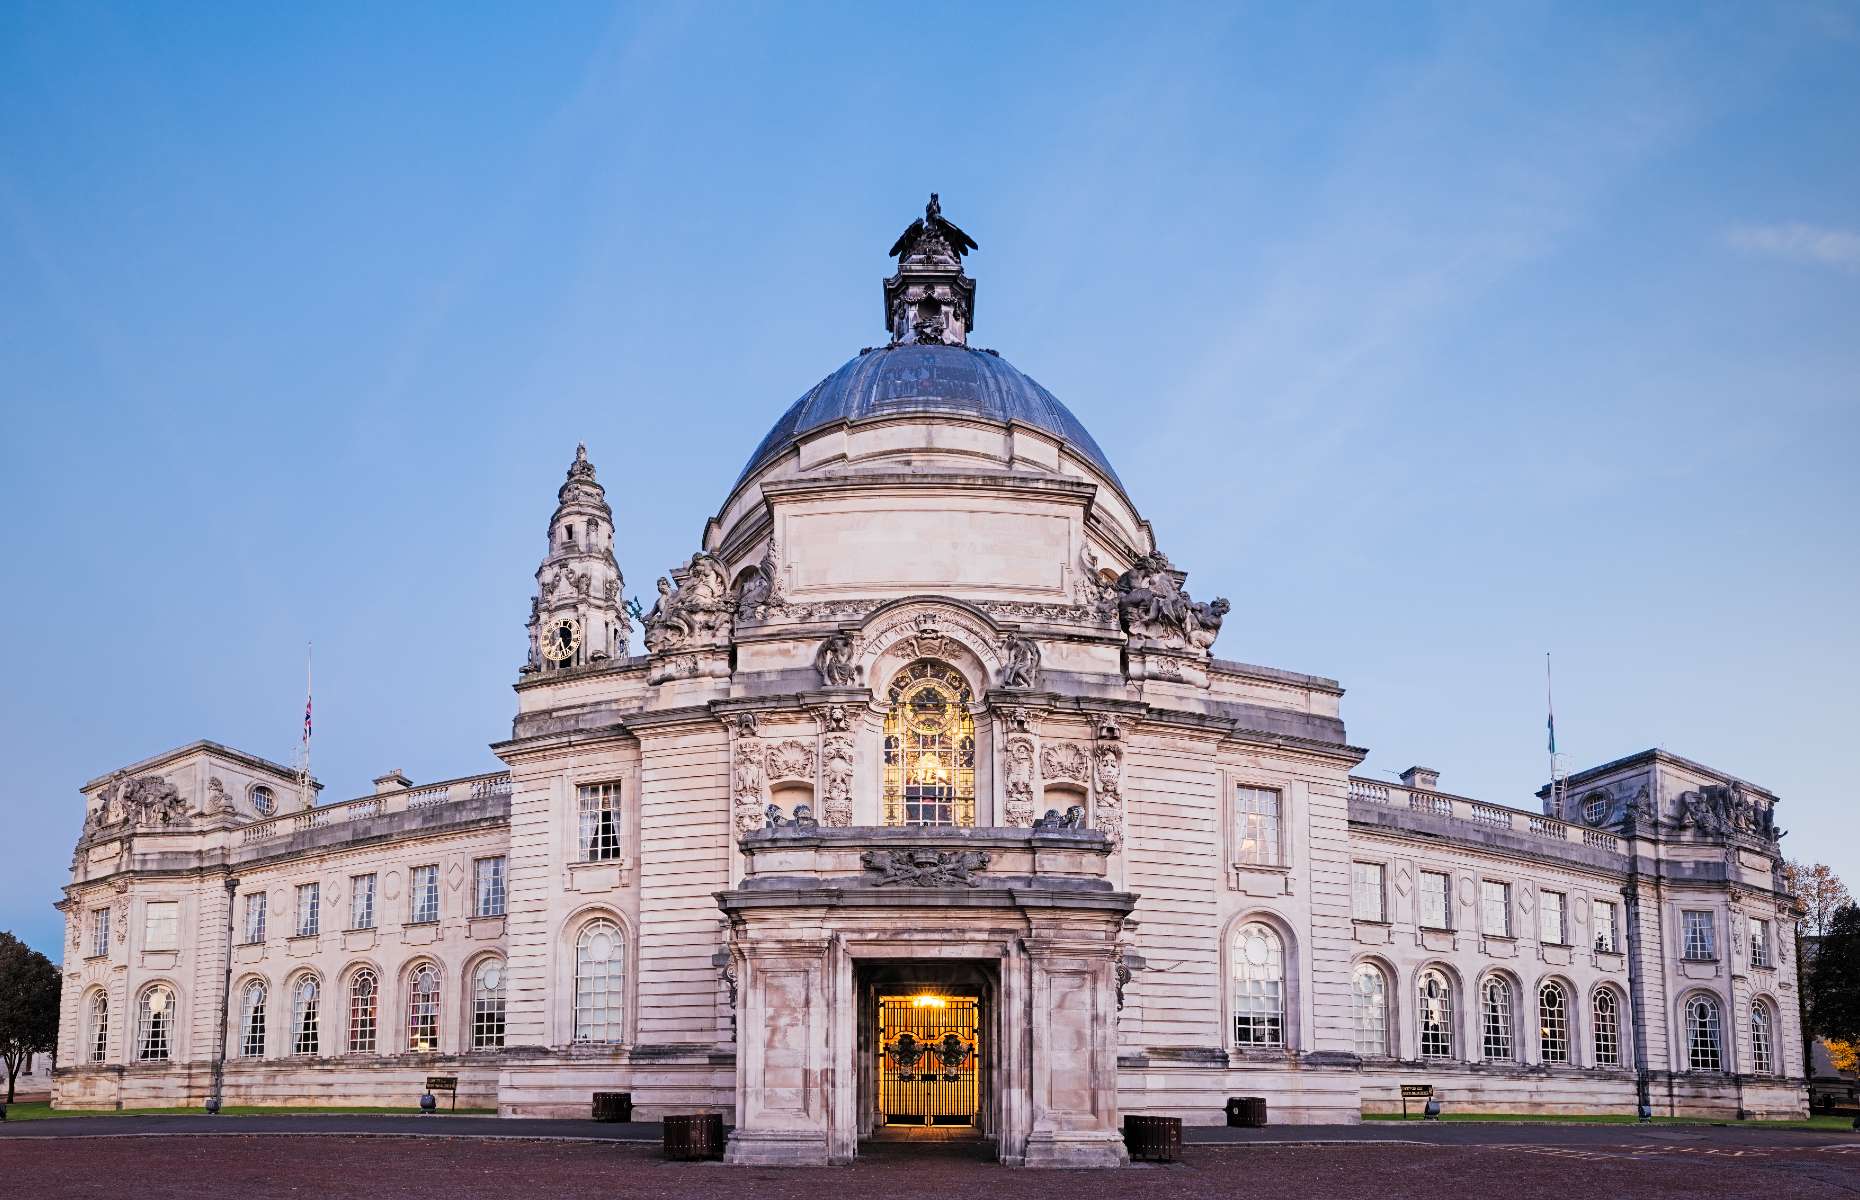 City Hall, Cardiff (Image: Chris Goddard/Shutterstock)